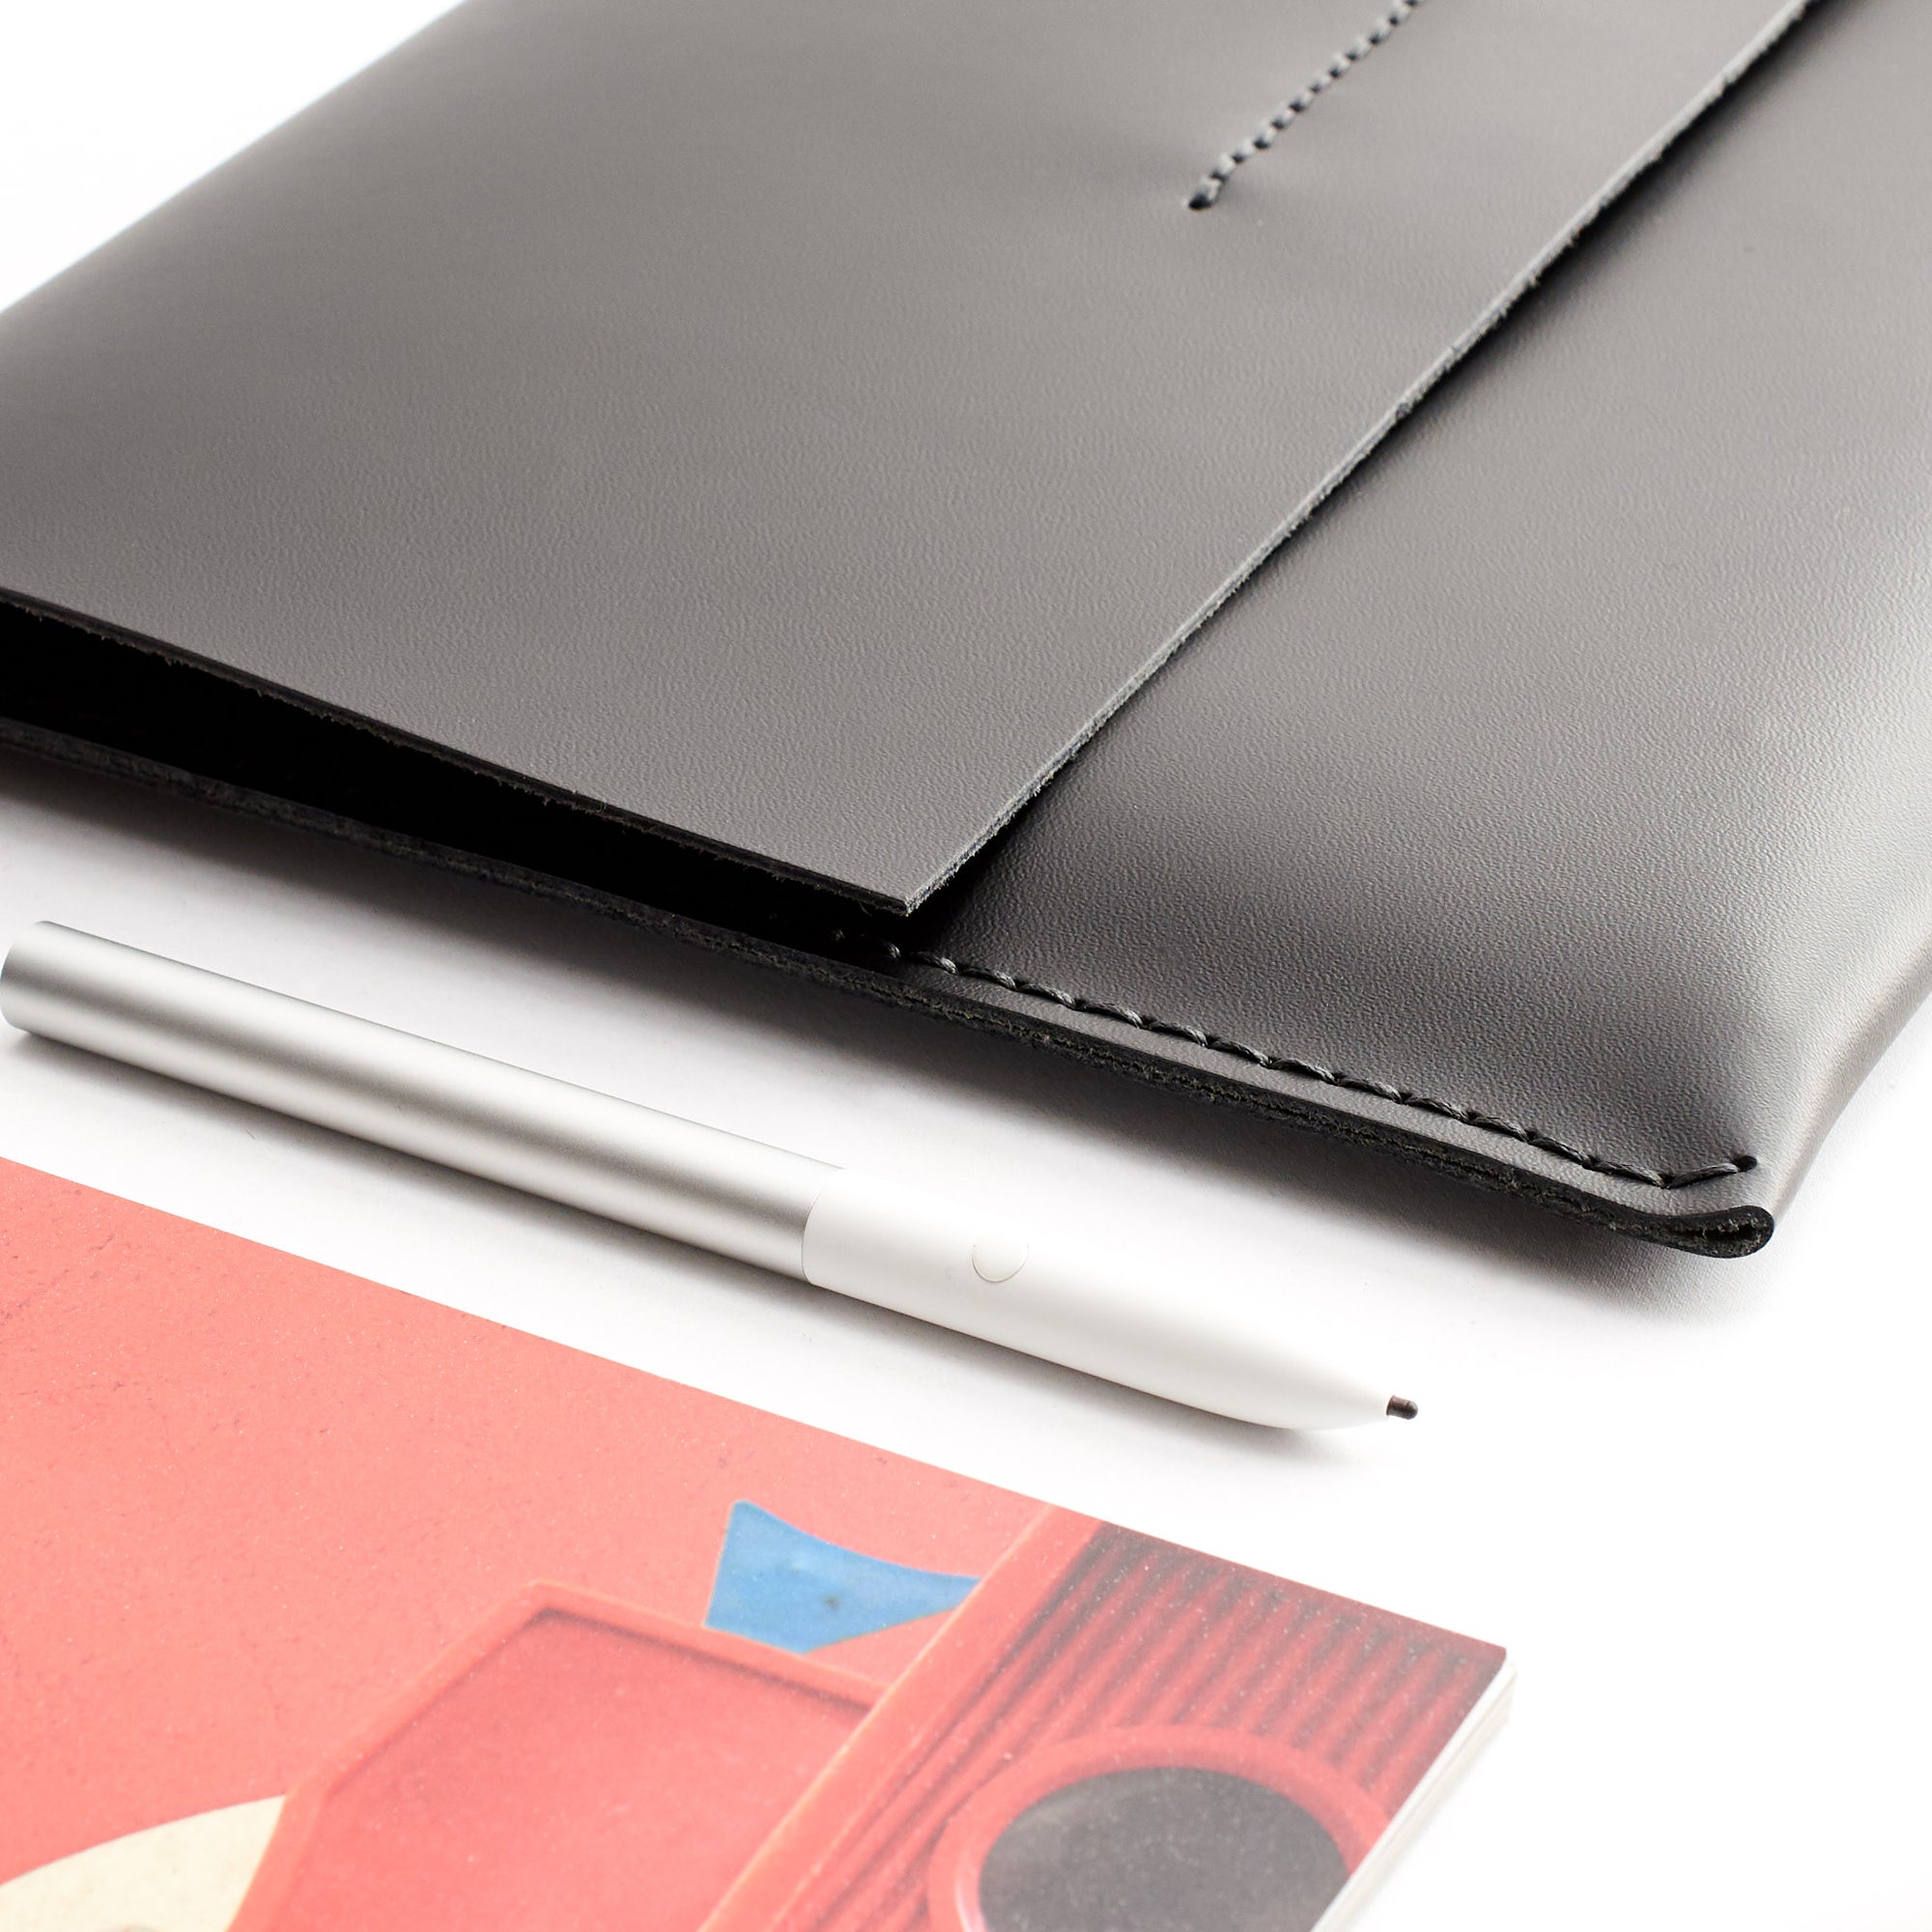 Style. black leather. Google Pixel Slate Black leather case with pen holder. Pixel Slate laptop mens folio